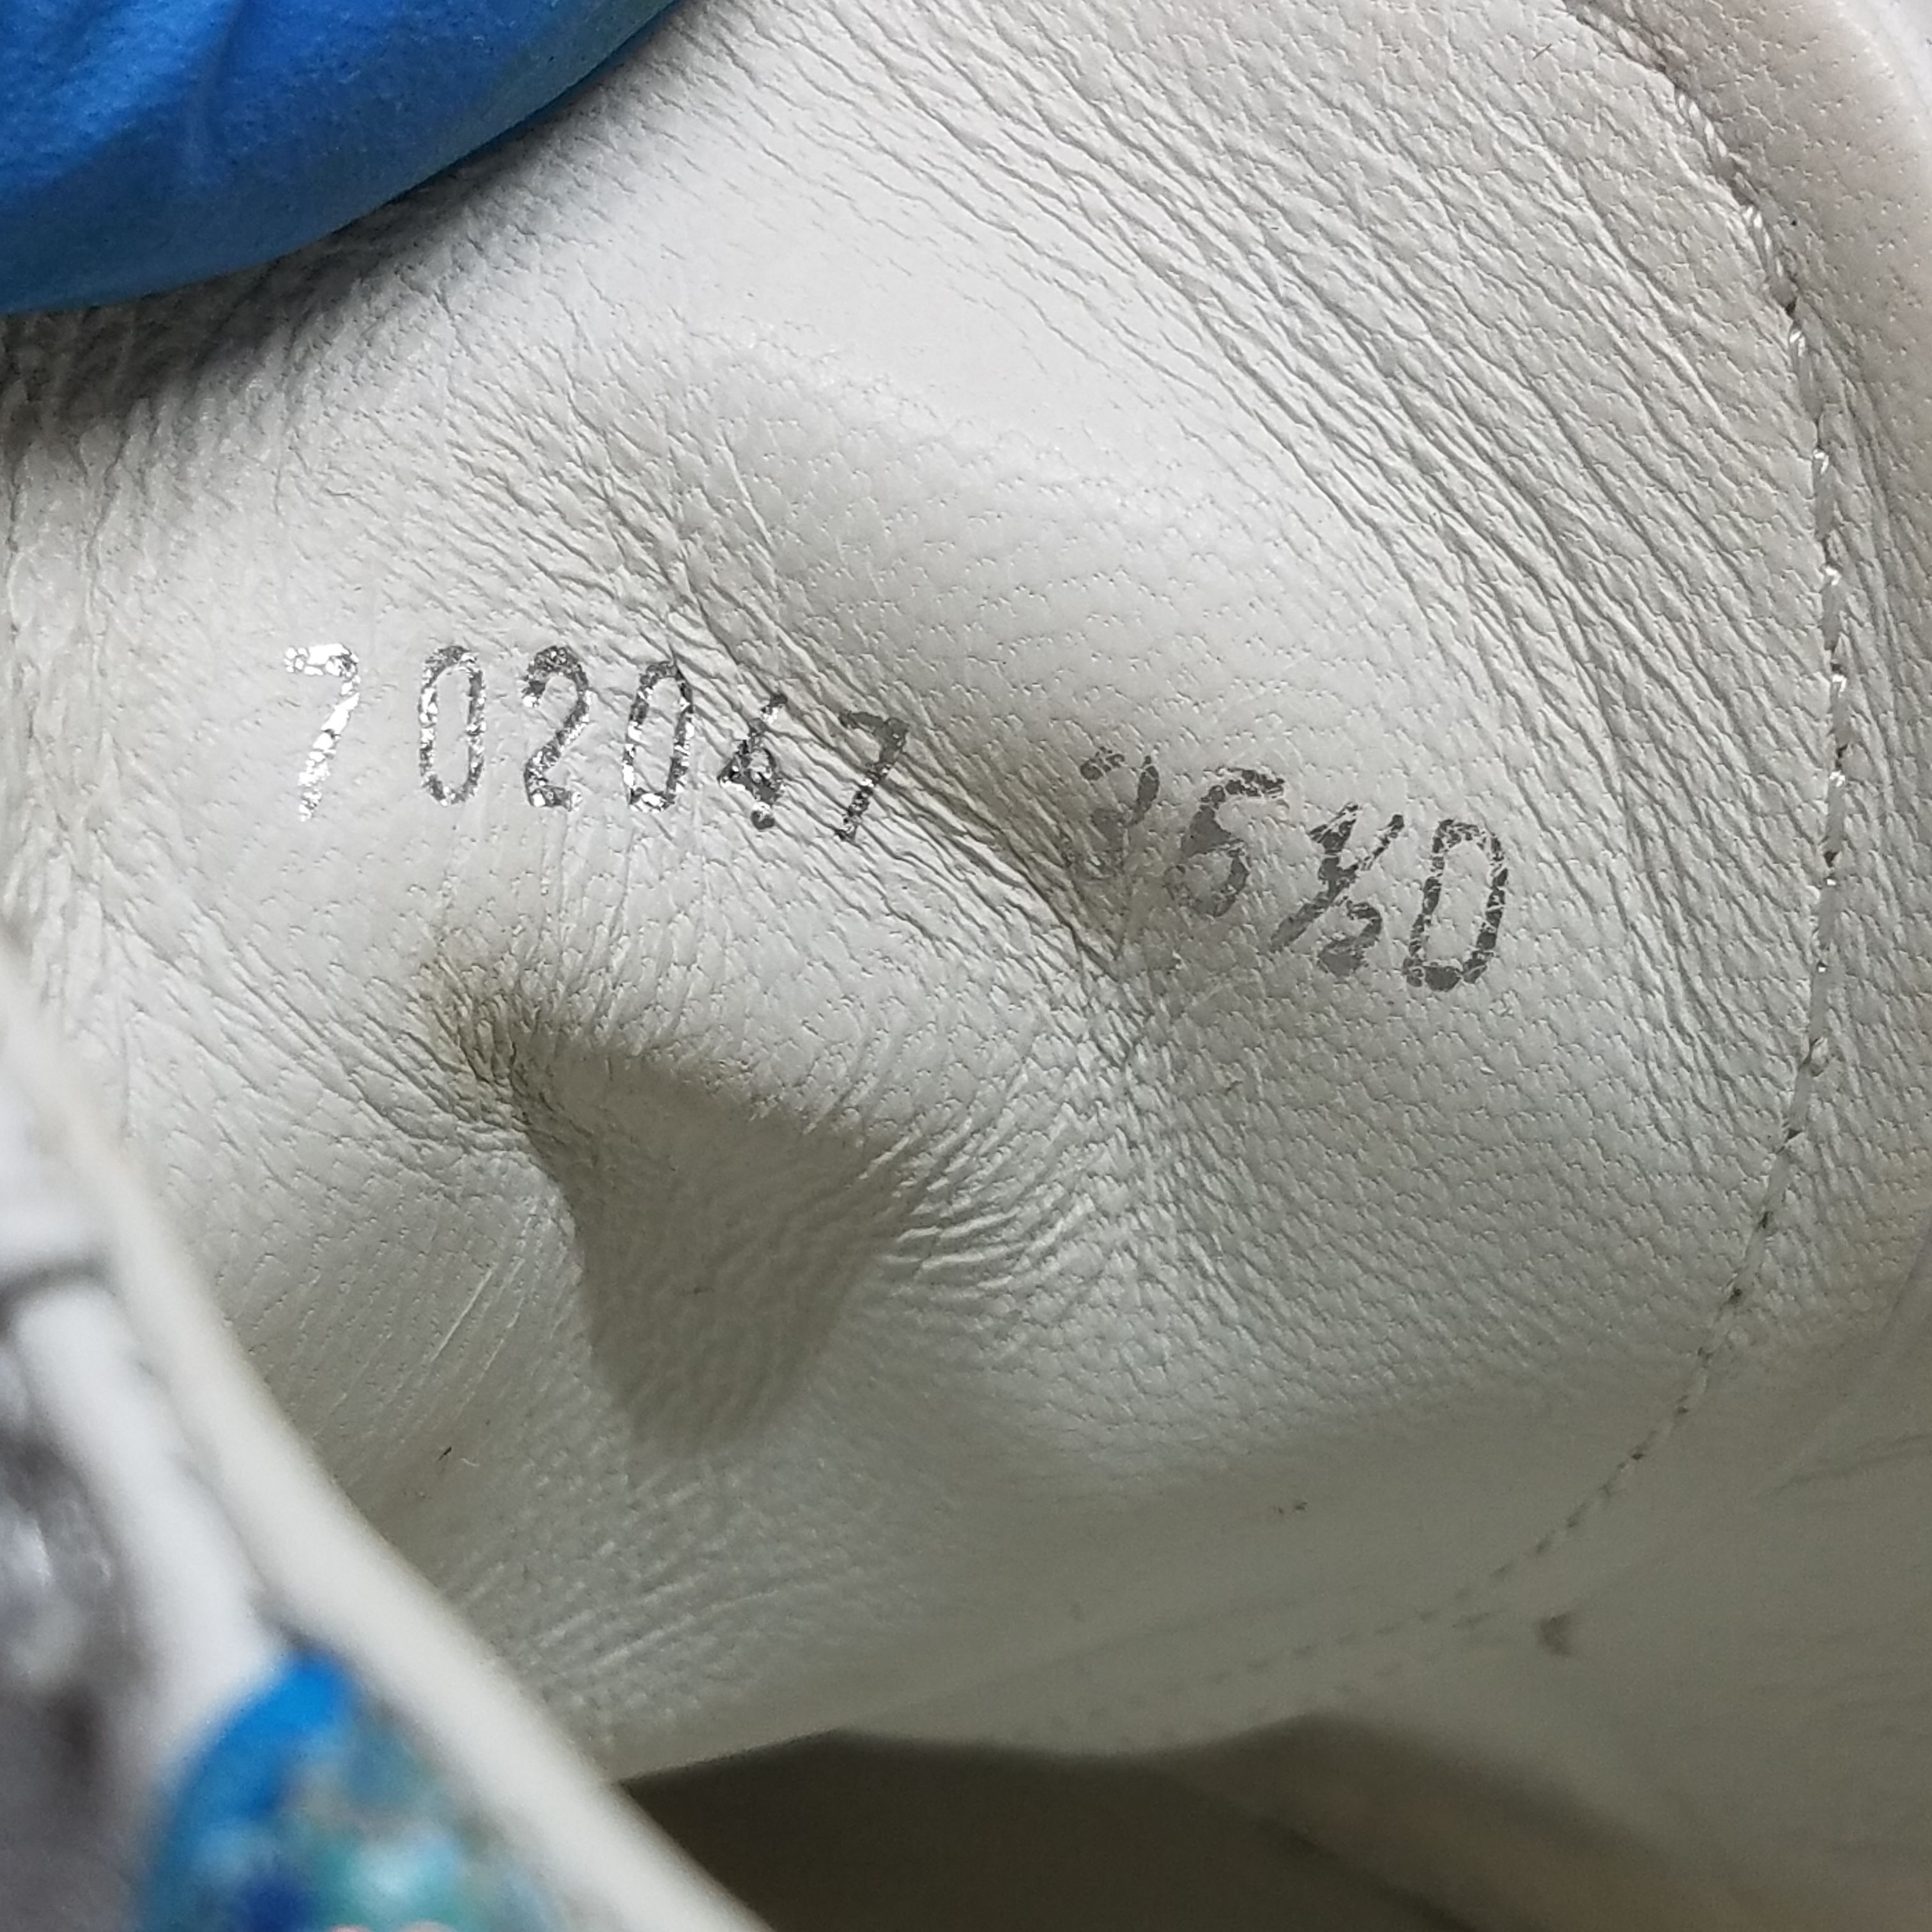 Crystal-embellished Oversized Sneaker in White/Crystal | Alexander McQueen  US